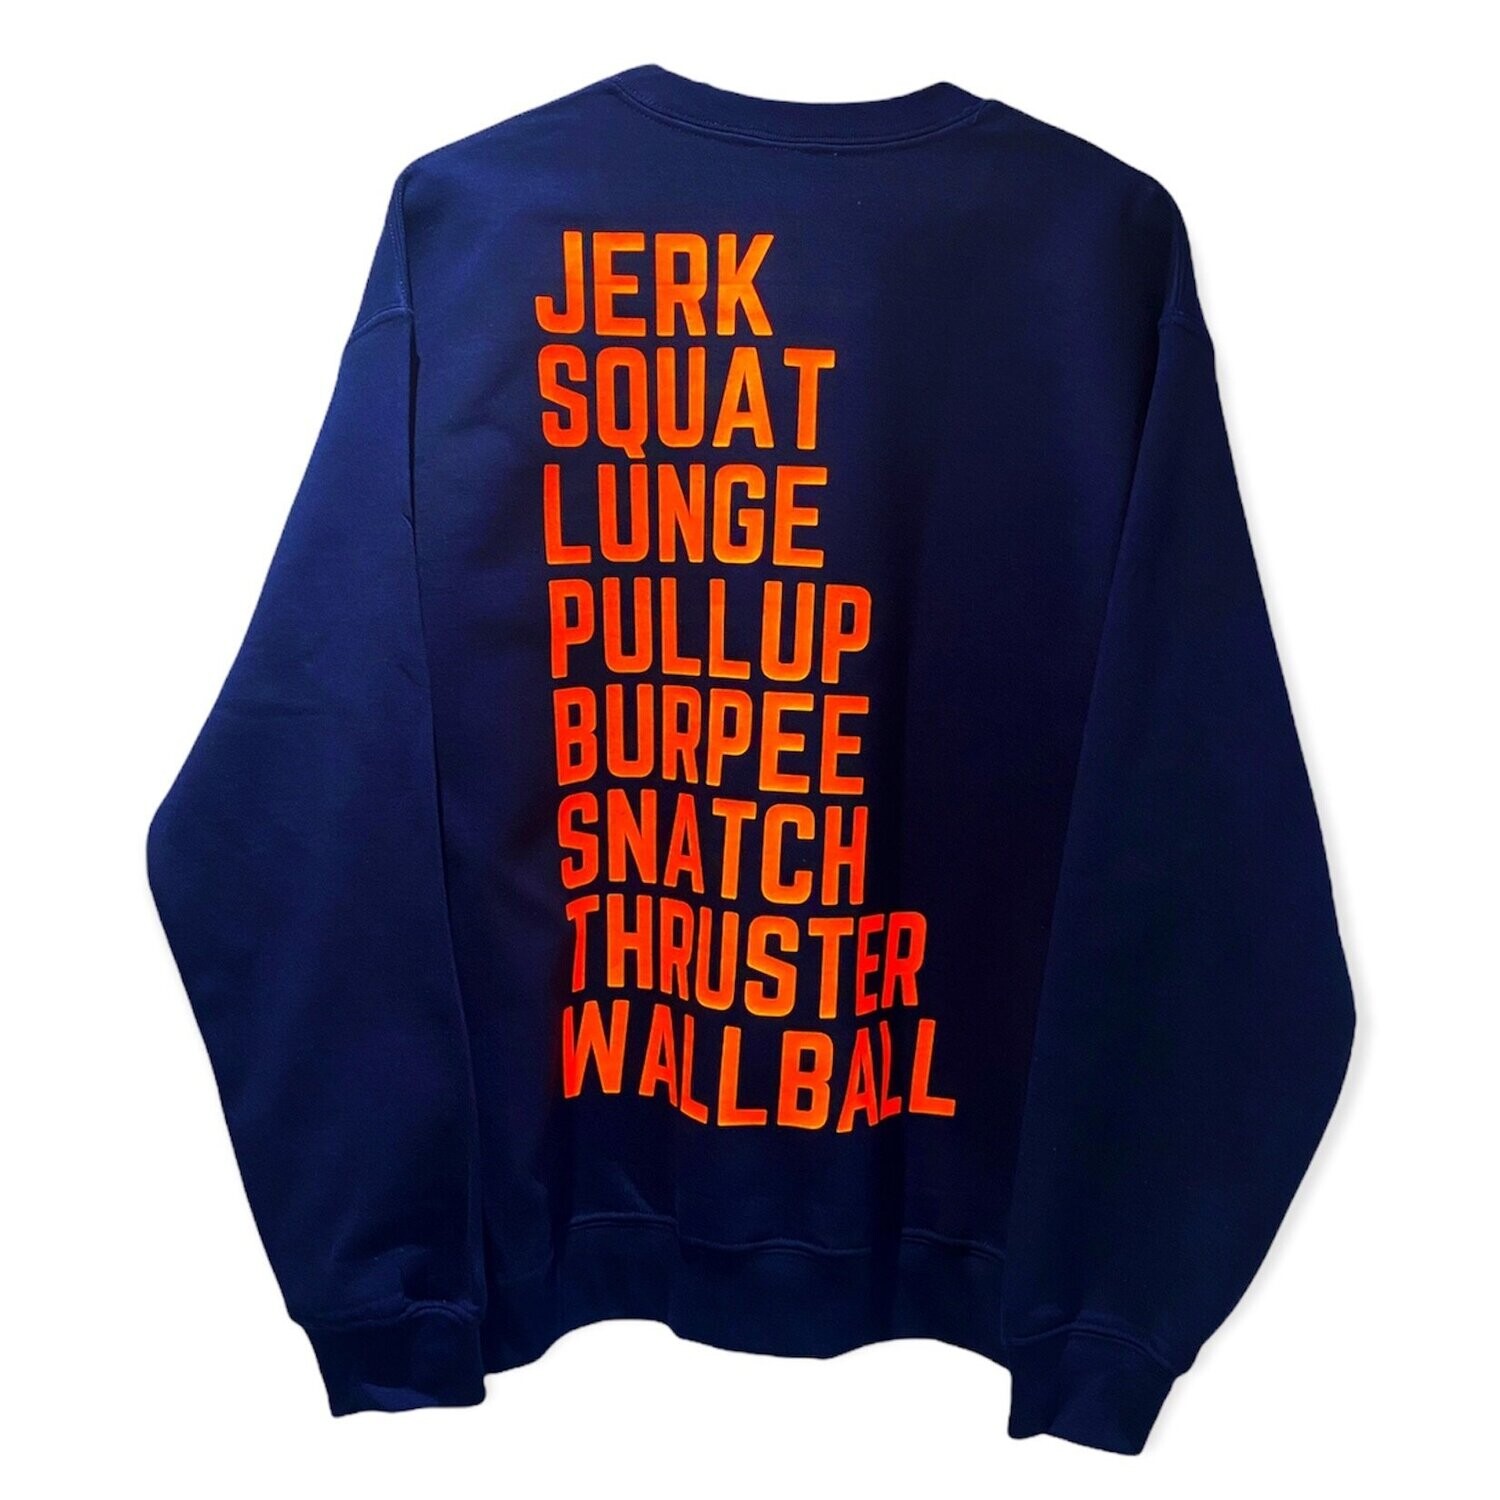 JERK Sweatshirt choose your own colours